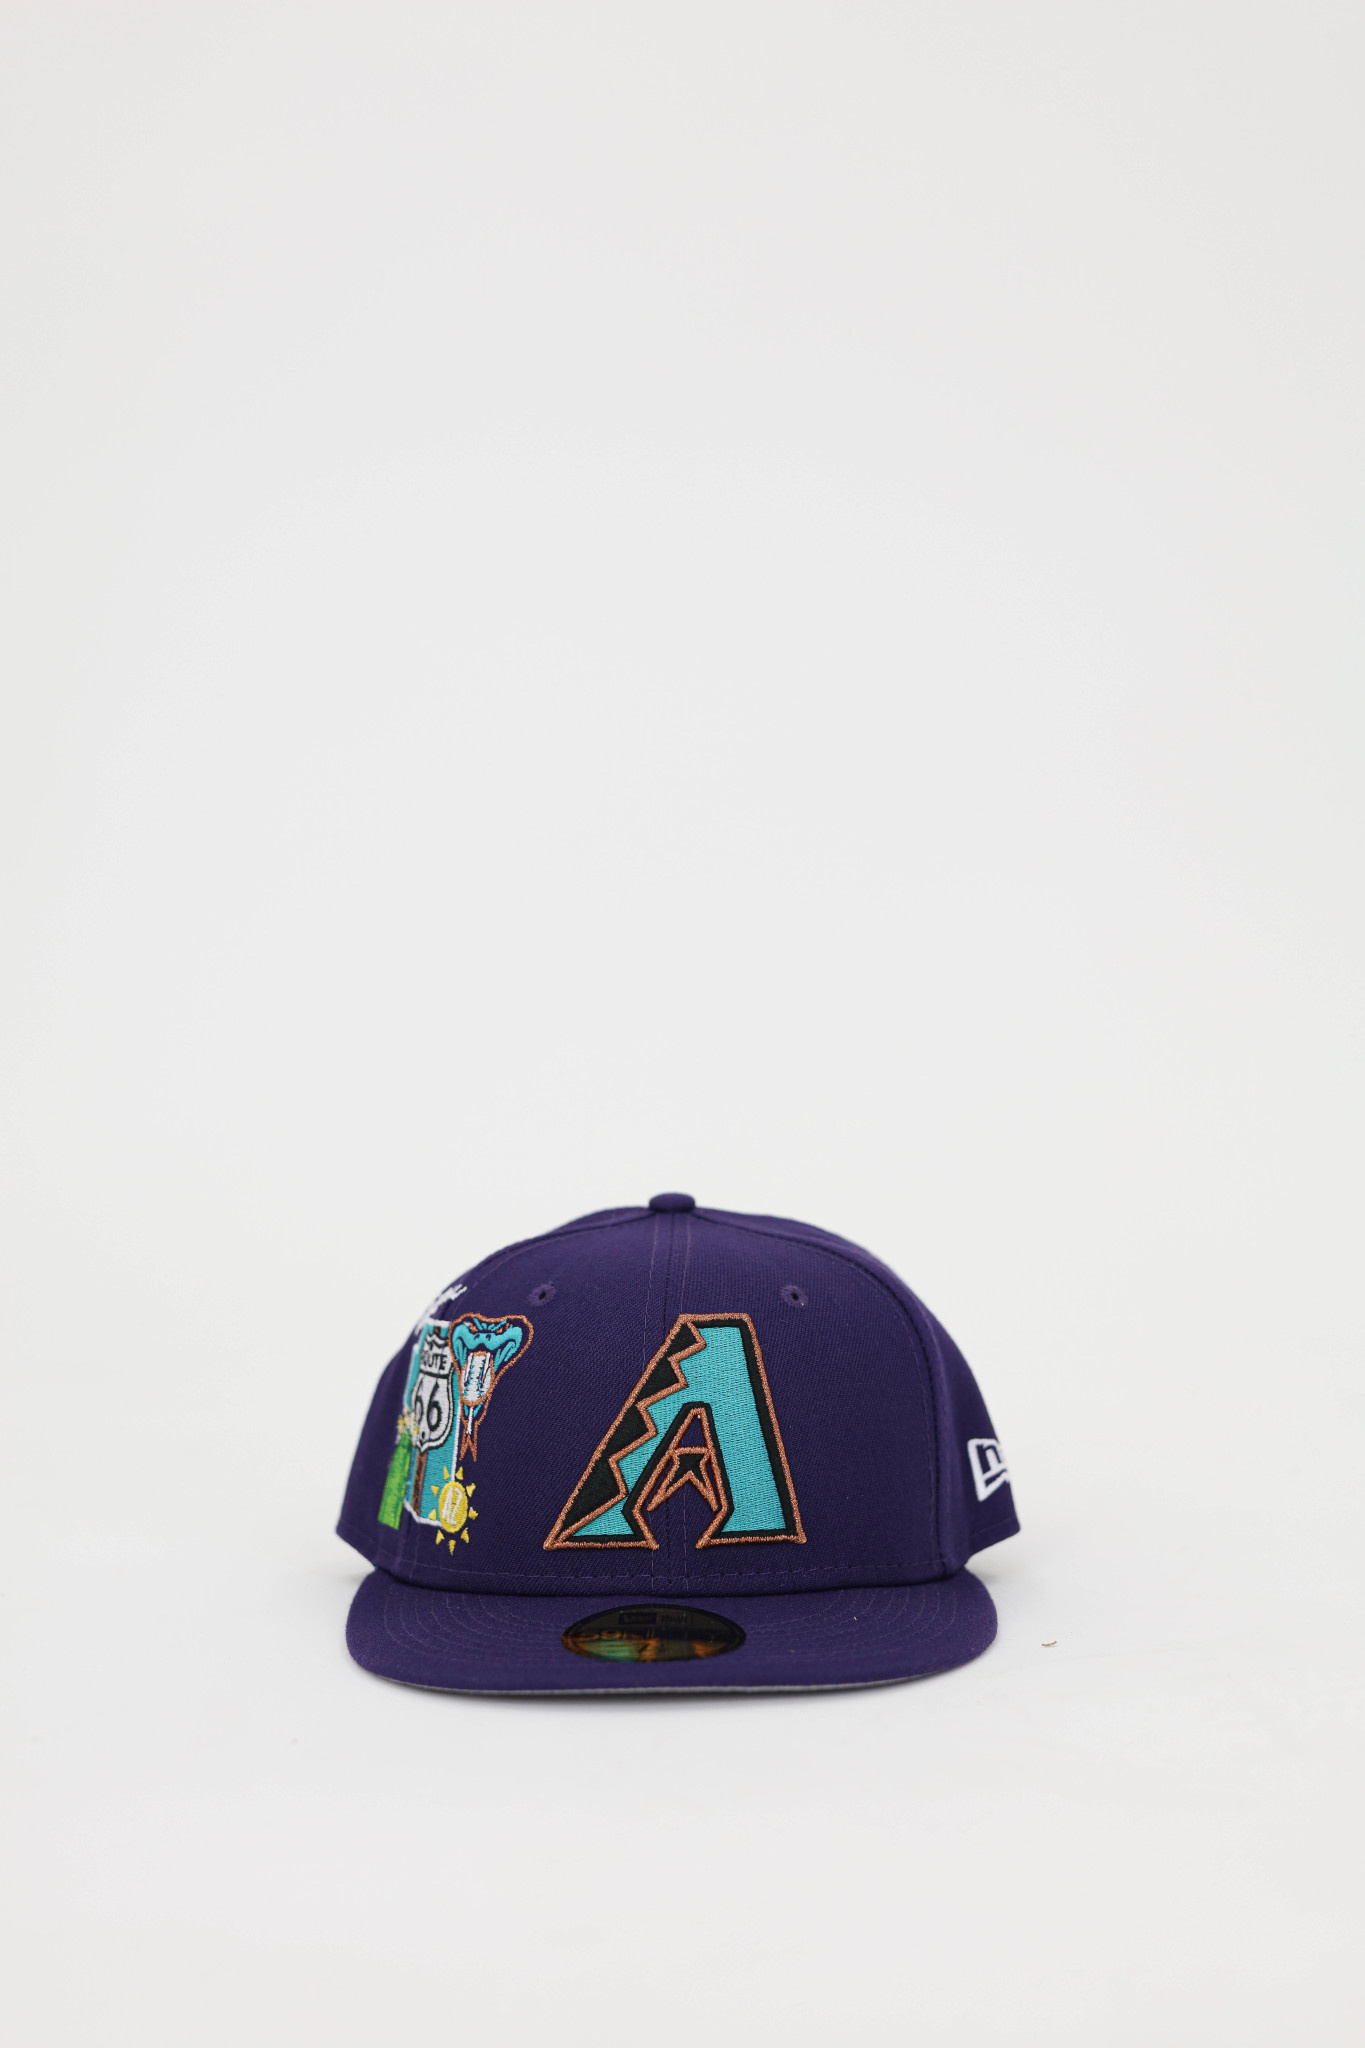 Arizona Diamondbacks New Era City Cluster 59FIFTY Fitted Hat - Purple